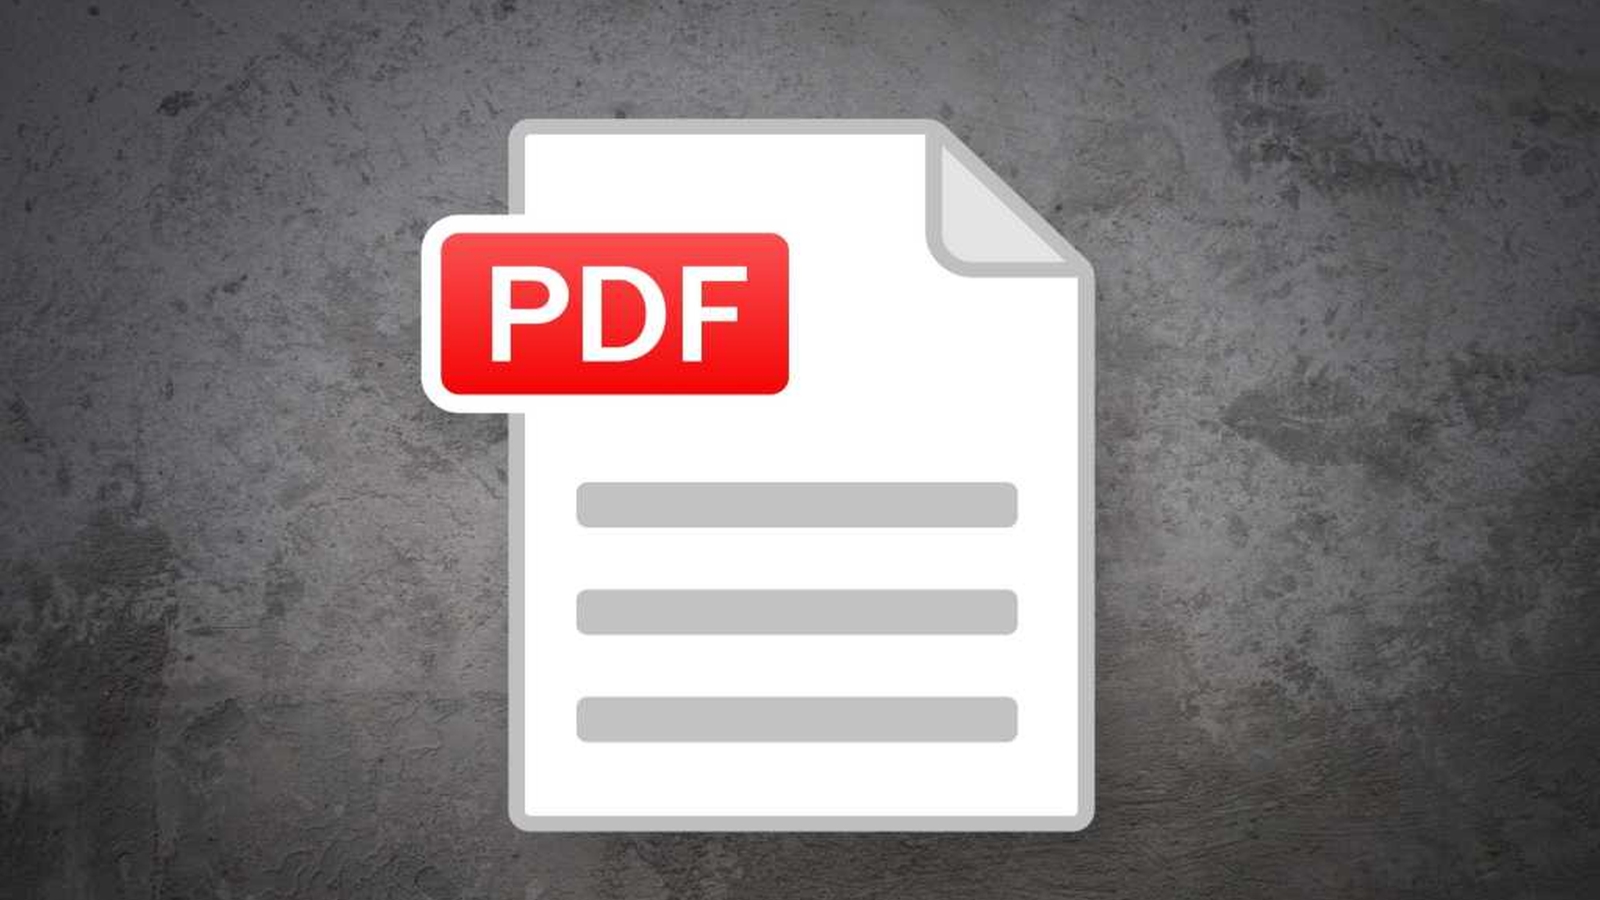 Foxit PDF eliminates 50 safety vulnerabilities